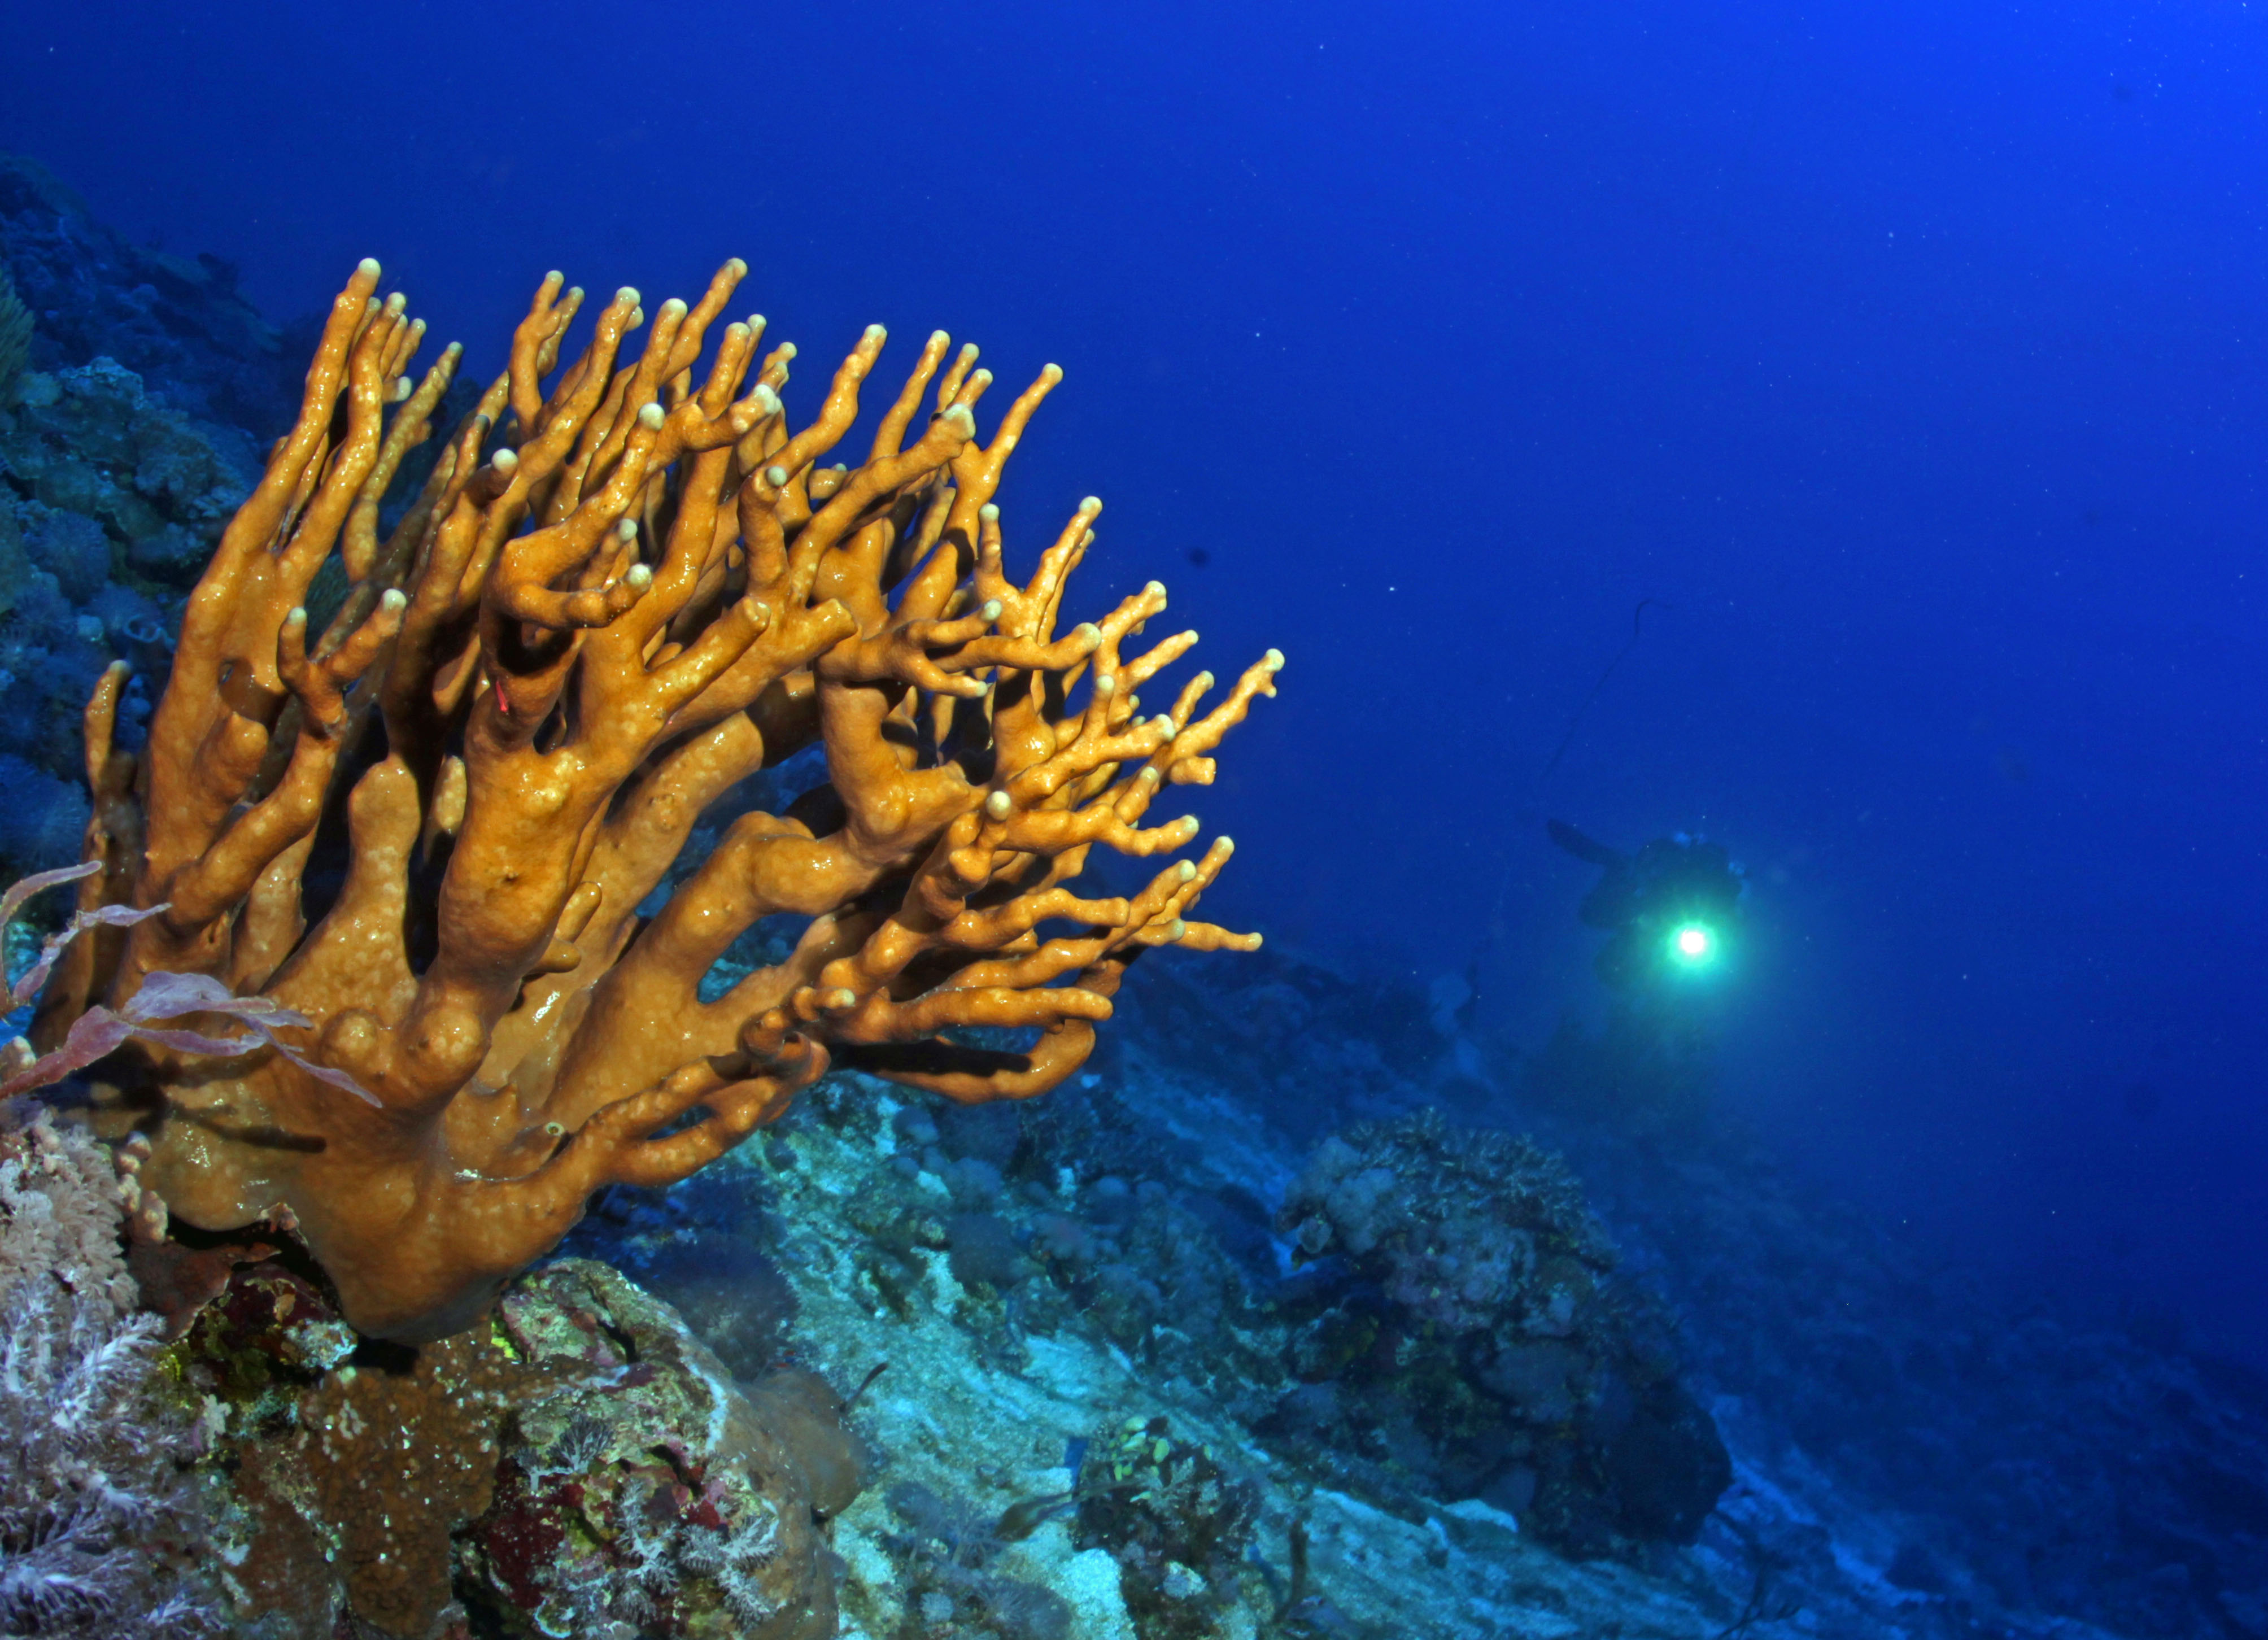 BENHAM RISE. Scientists say Benham Rise is rich in marine wildlife. Photo from Oceana/UPLB  